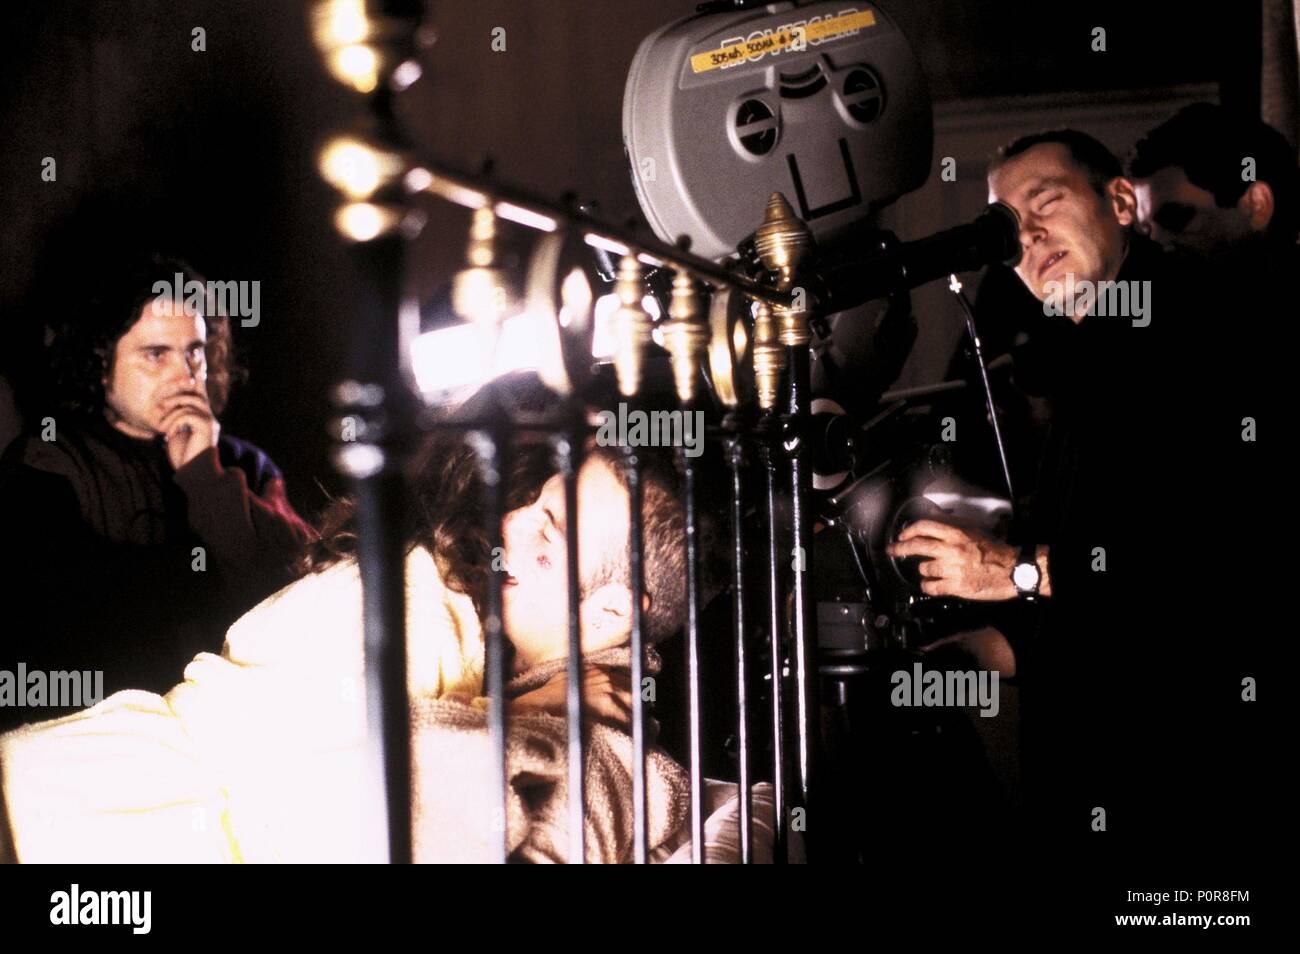 Original Film Title: ARDERAS CONMIGO.  English Title: BURN WITH ME.  Film Director: MIGUEL ANGEL SANCHEZ.  Year: 2002. Credit: LOTUS FILMS INTERNATIONAL / PORRES, MONICA / Album Stock Photo